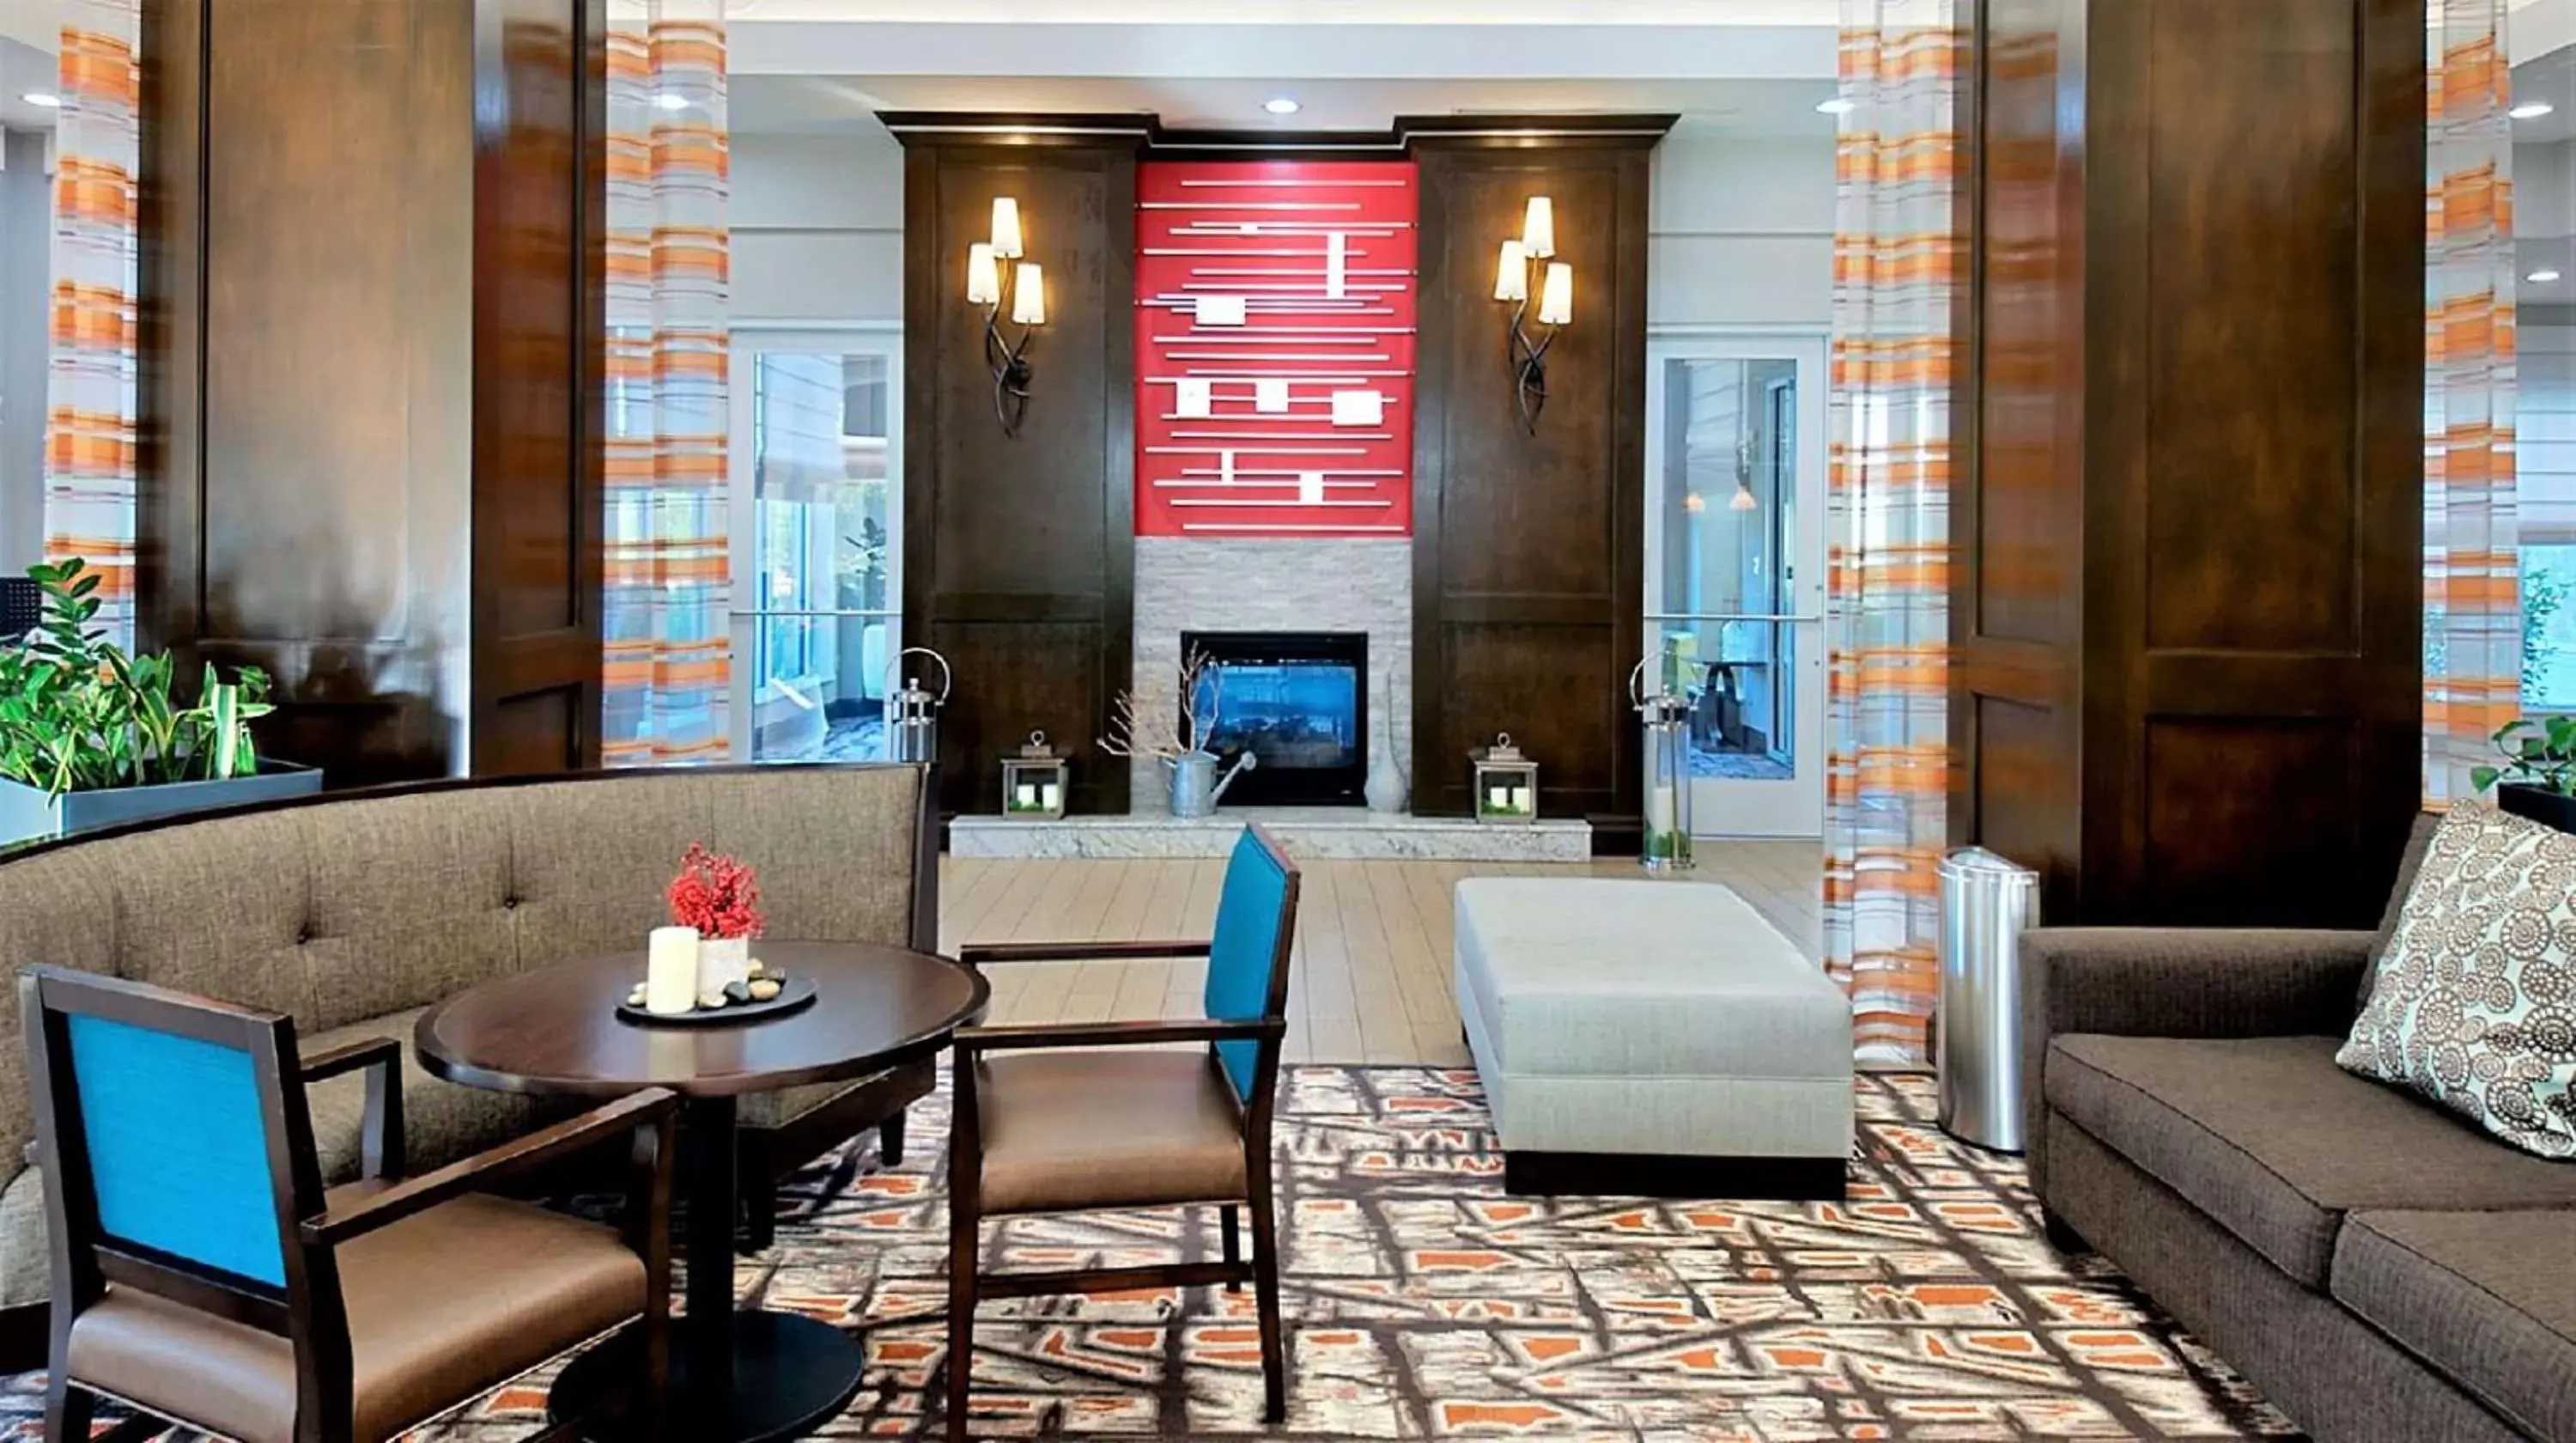 Lobby or reception in Hilton Garden Inn Houston Cypress Station, TX